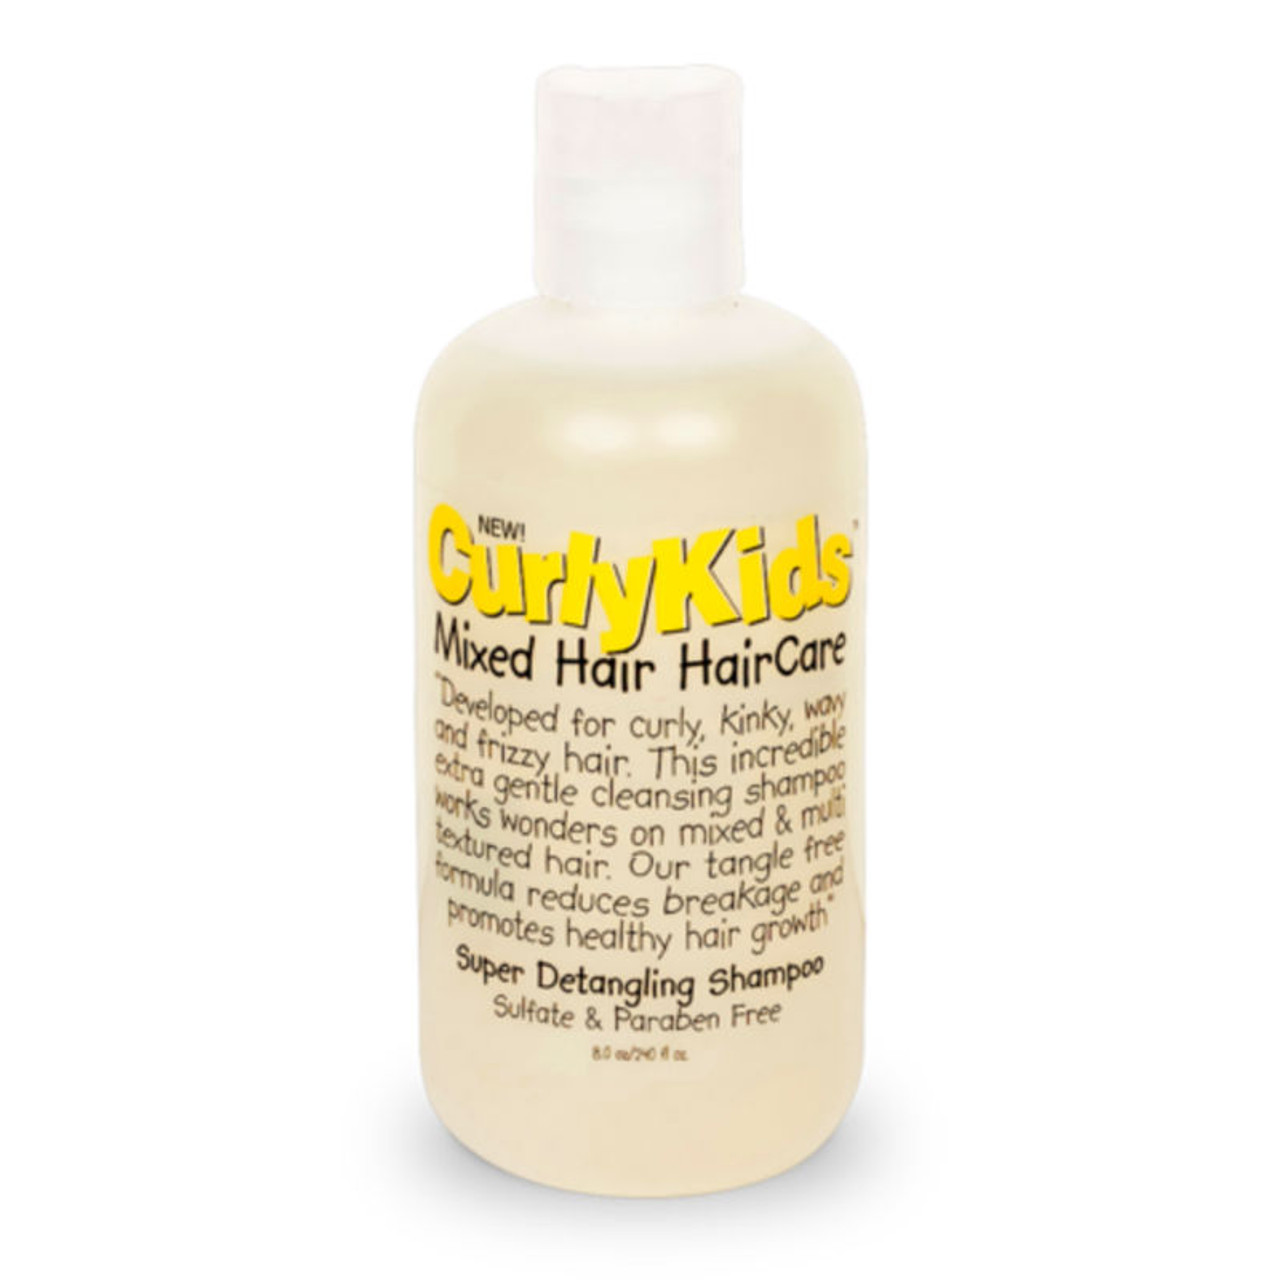 CurlyKids Super Detangling Shampoo (8 oz.) - NaturallyCurly